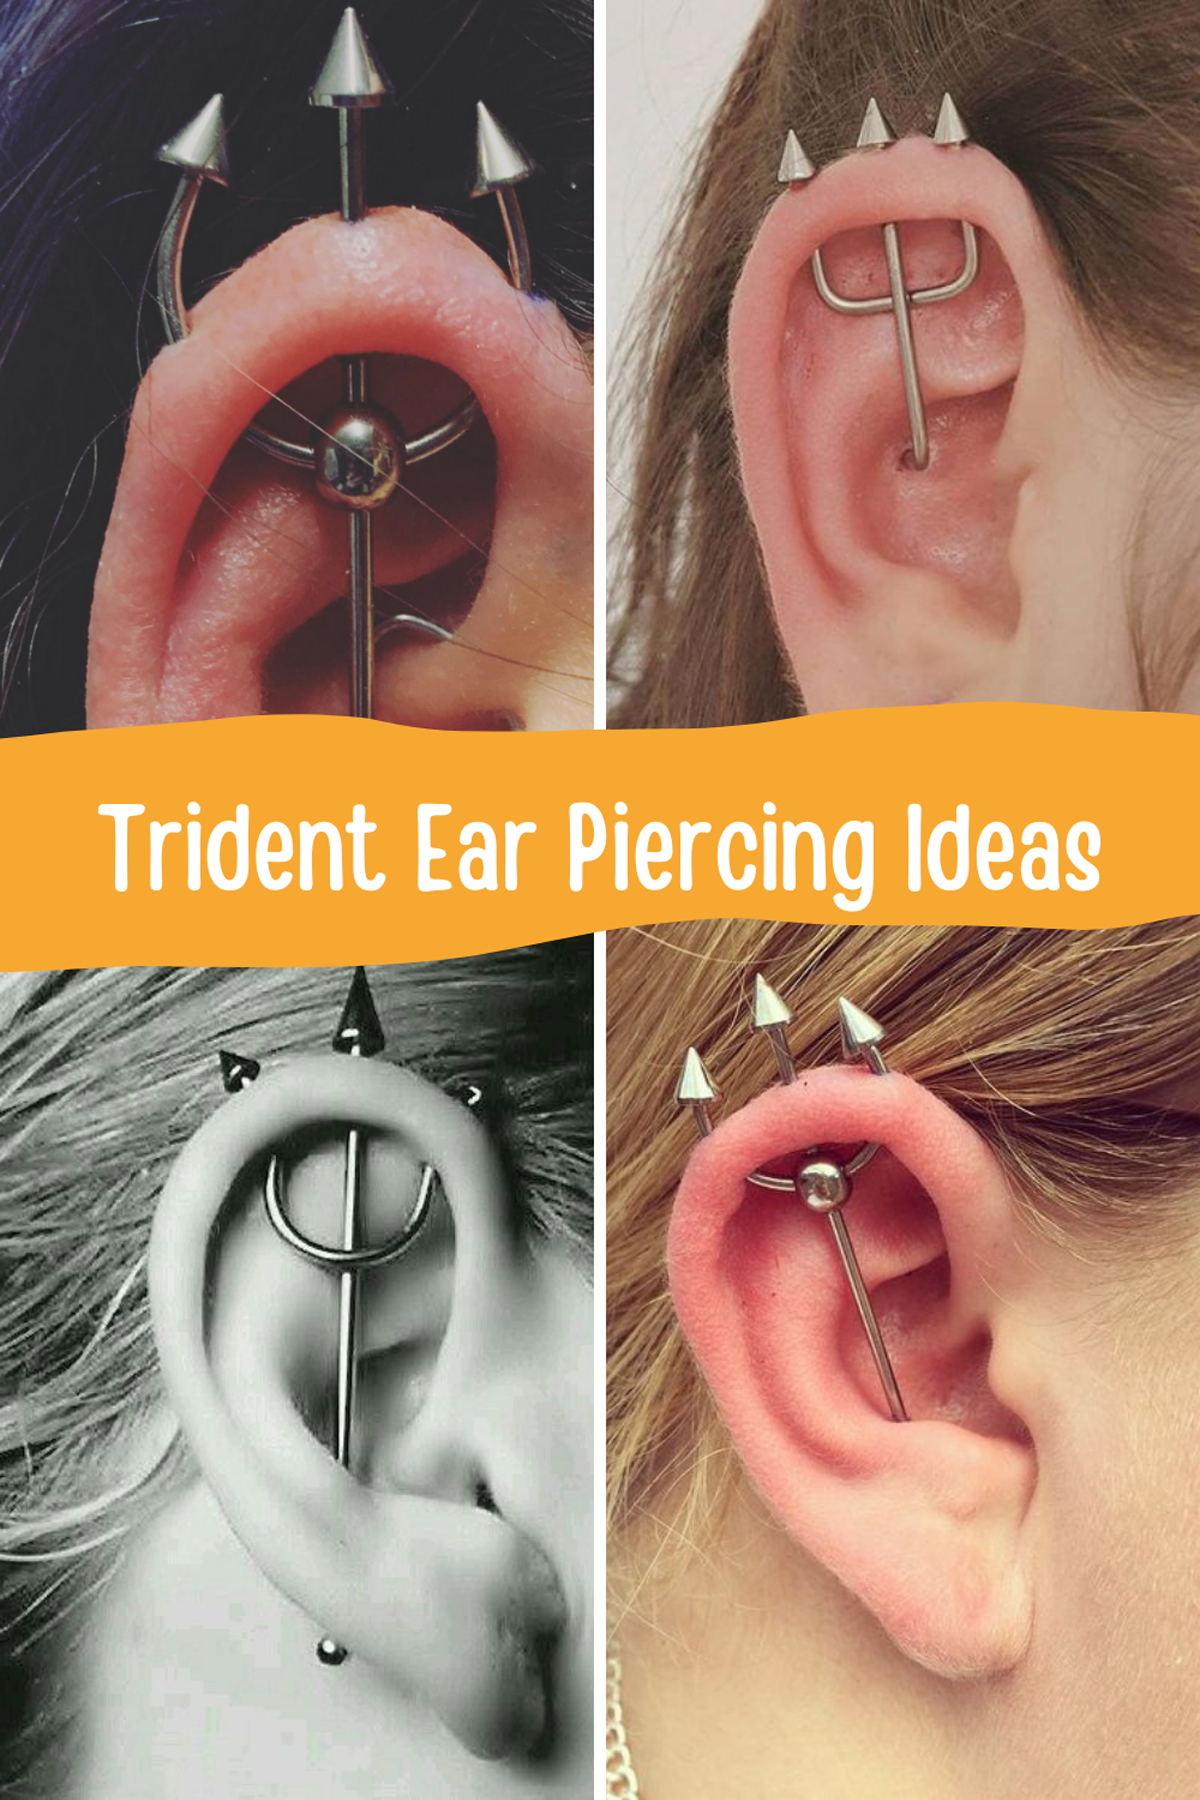 Ear Piercings pitchforks